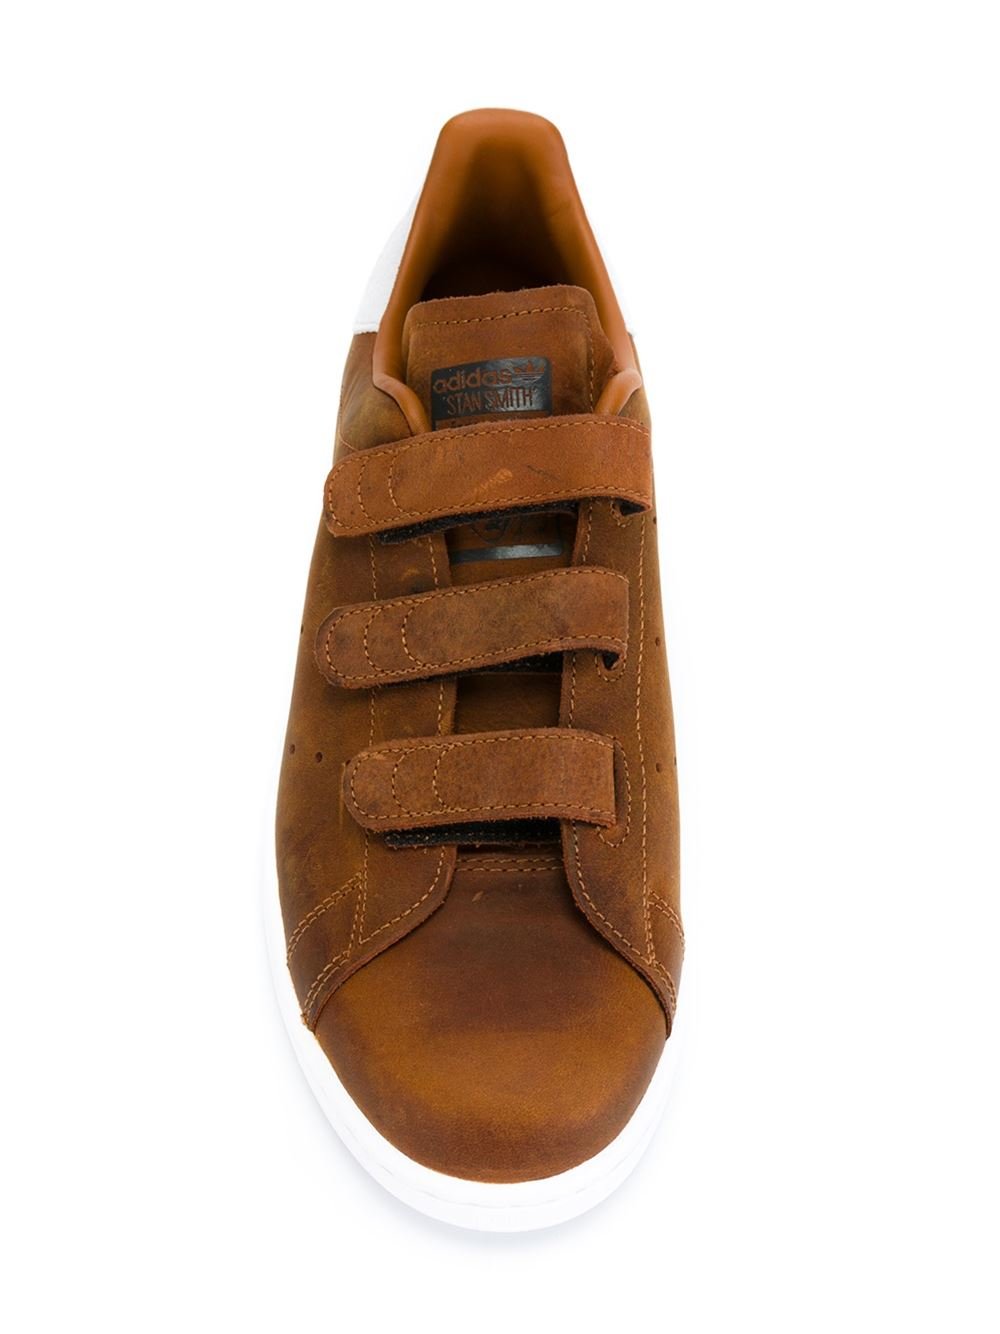 adidas Originals 'stan Smith Cf' Sneakers in Brown for Men - Lyst